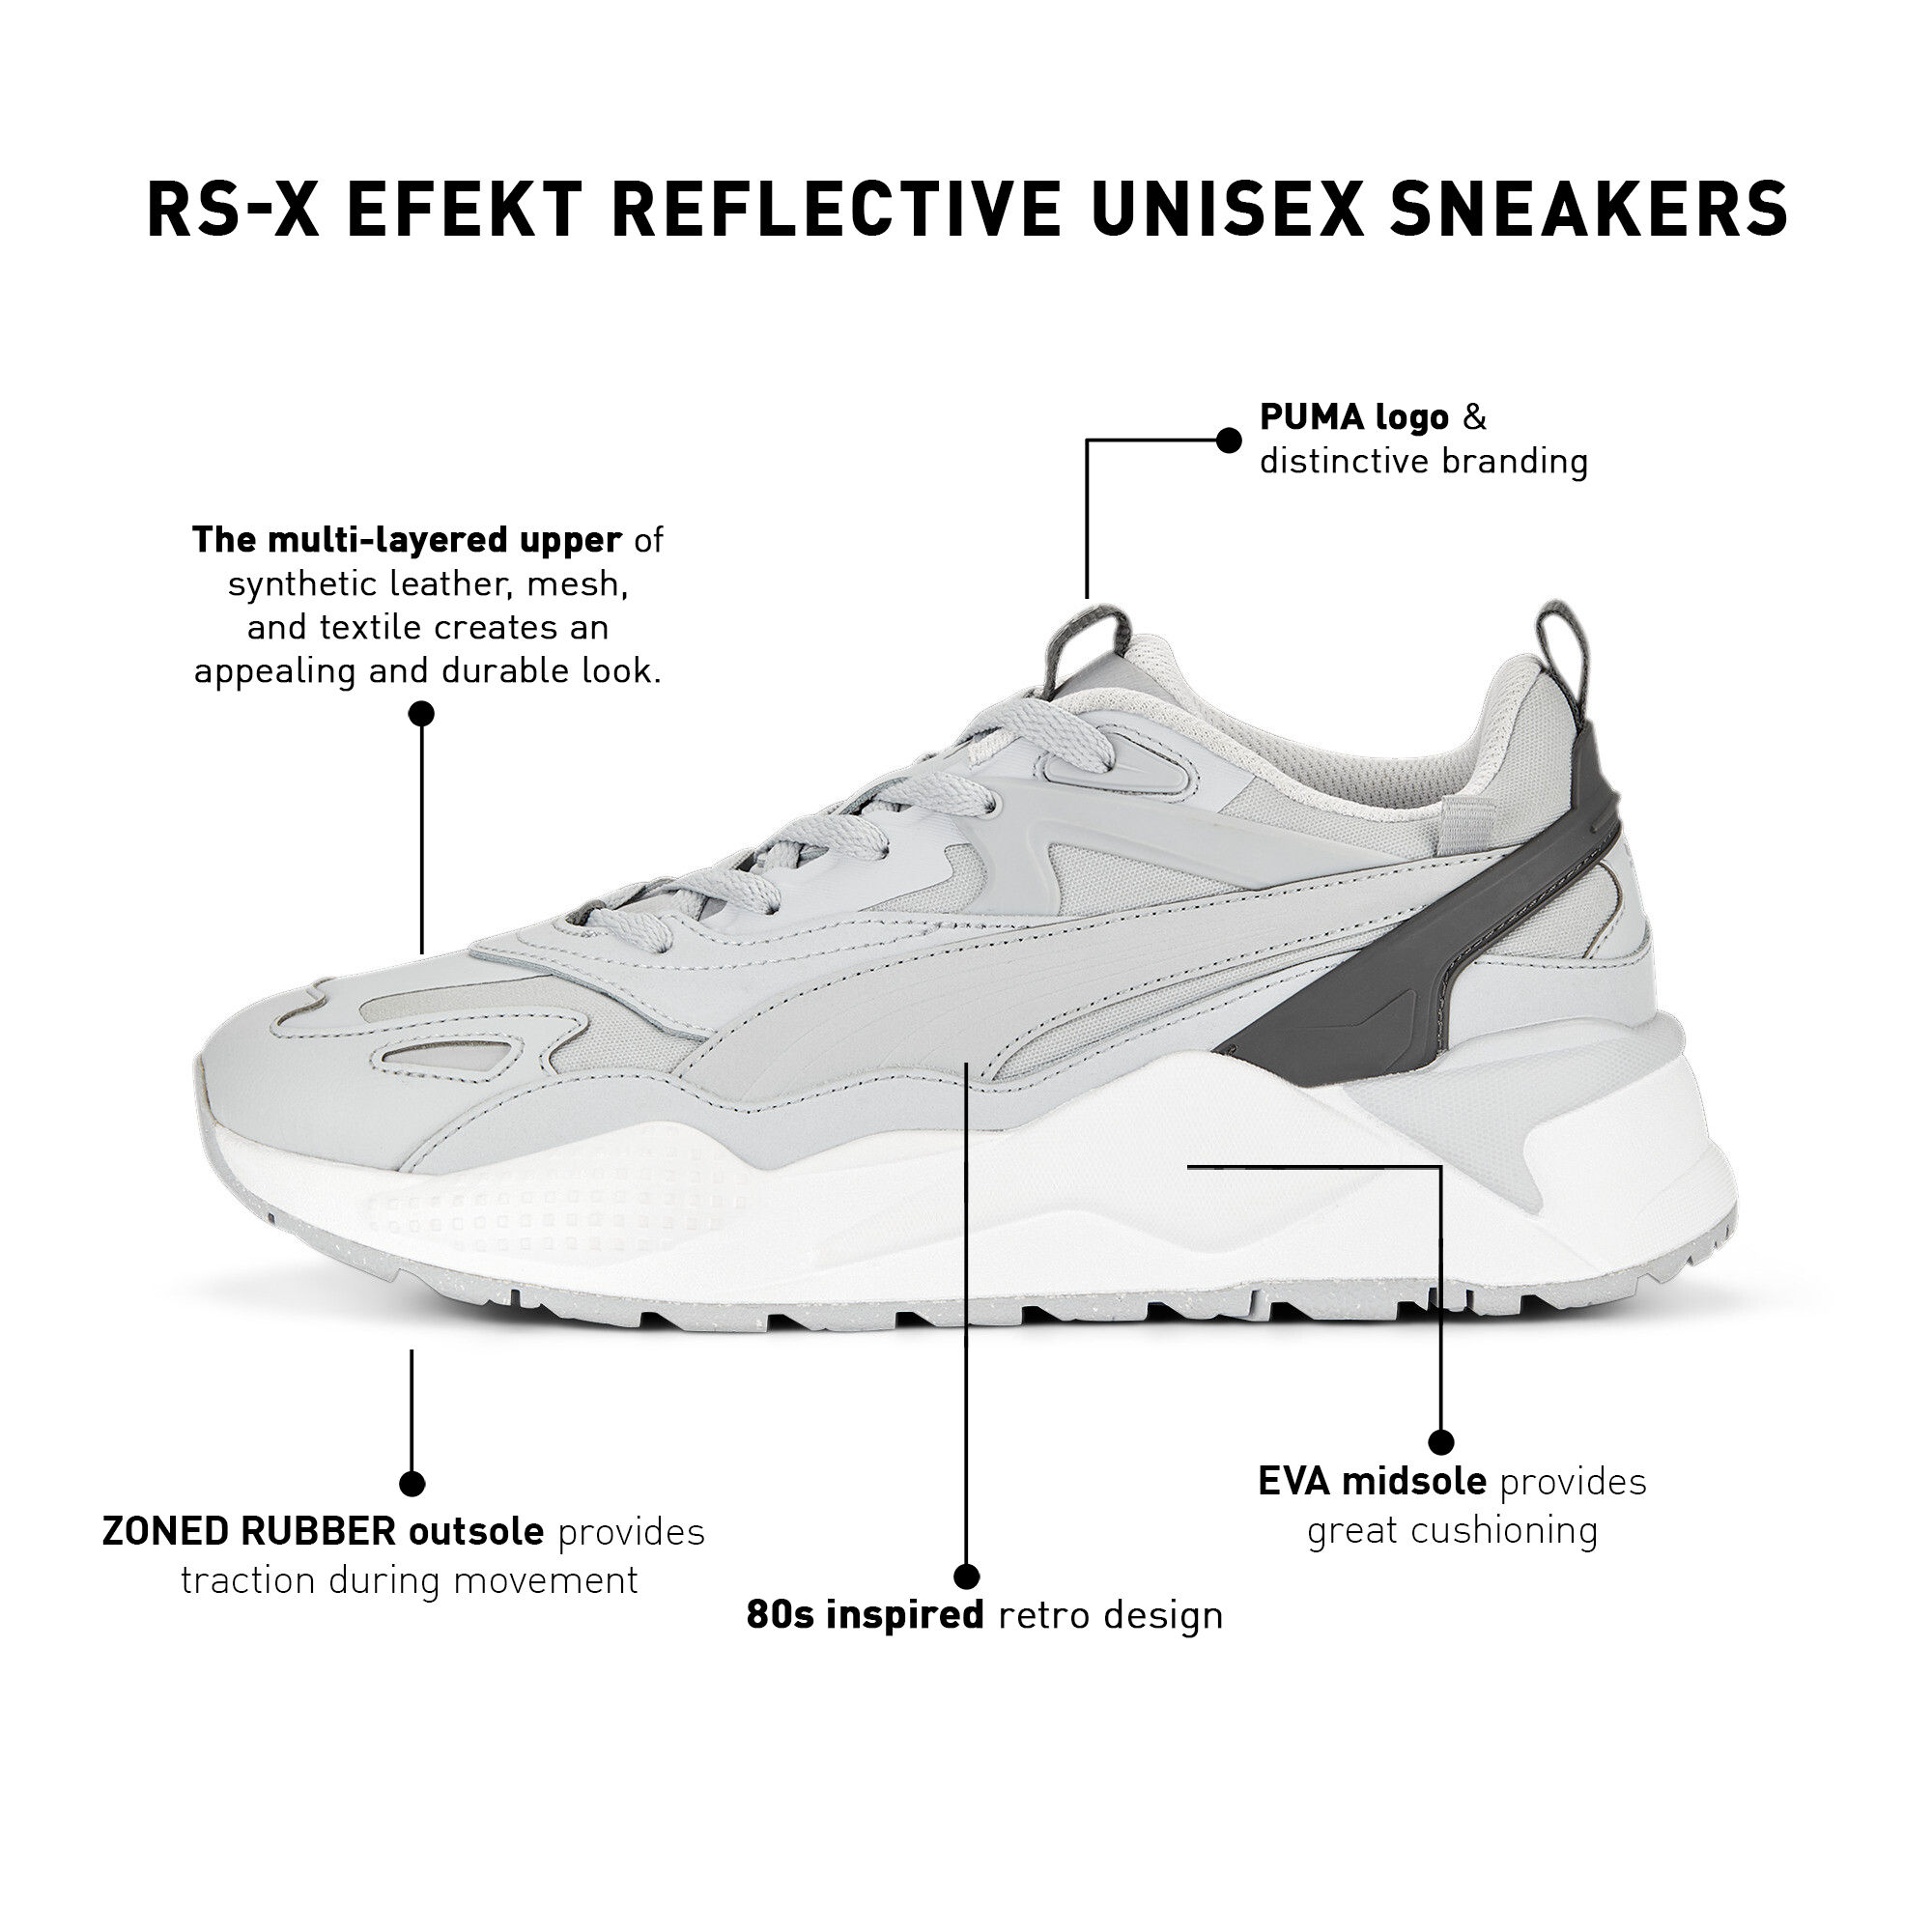 Styling the new PUMA RS-TRCK sneakers! Thank you, @puma & @jdsports ... |  TikTok